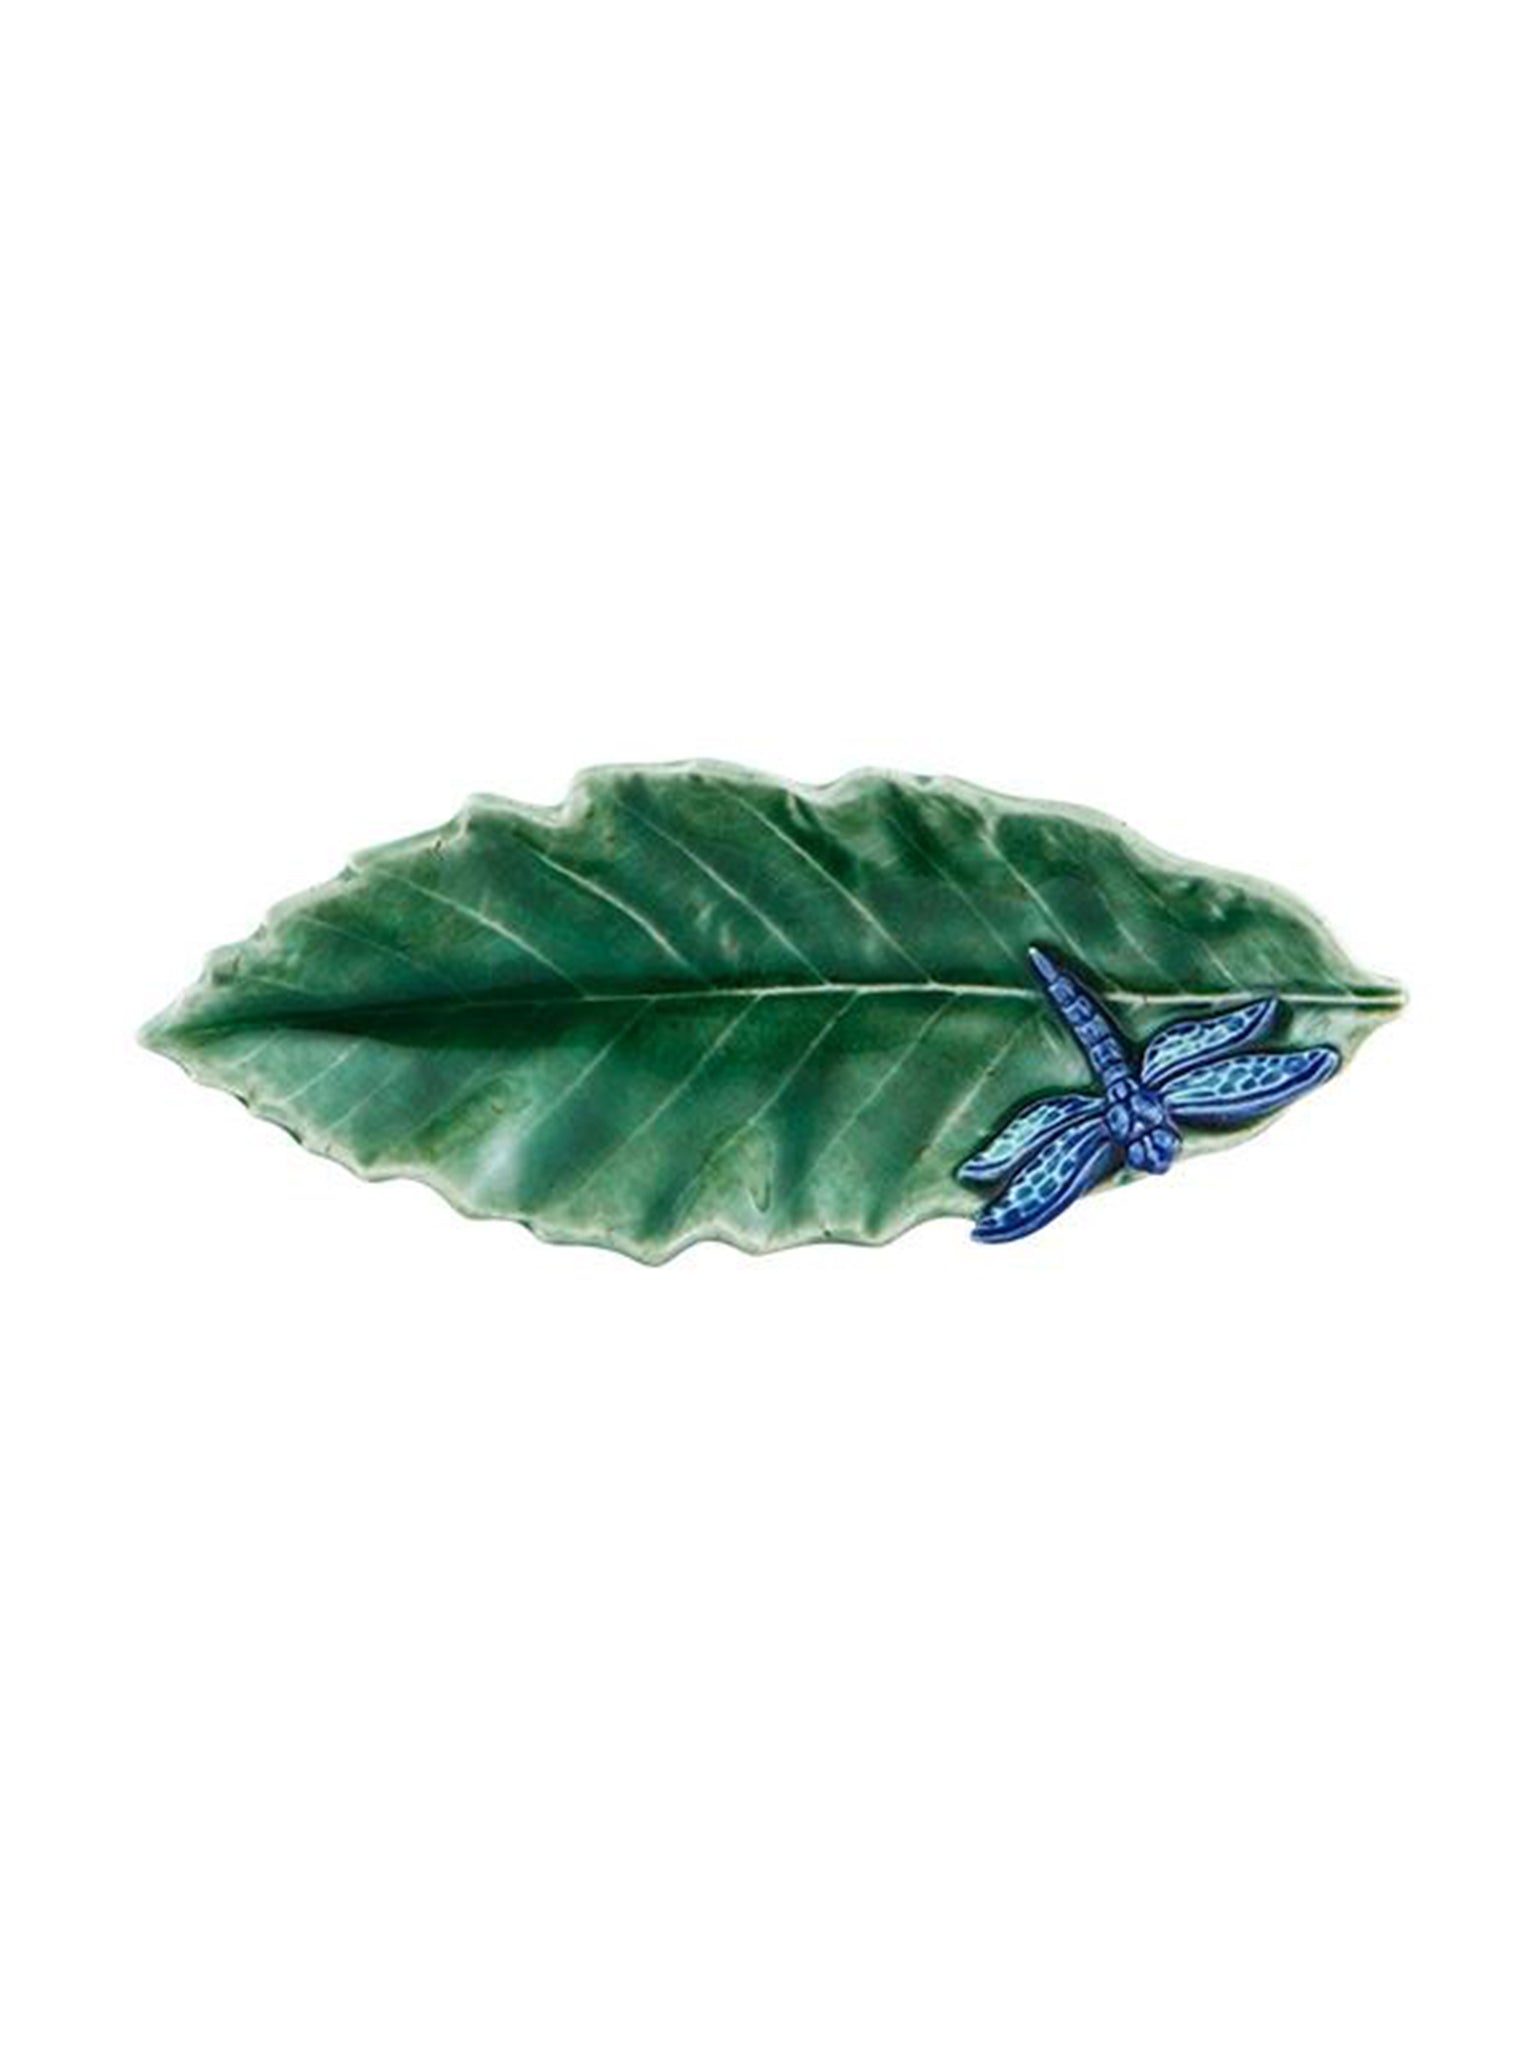 Bordallo Pinheiro Chestnut Leaf with Dragonfly Plate Weston Table